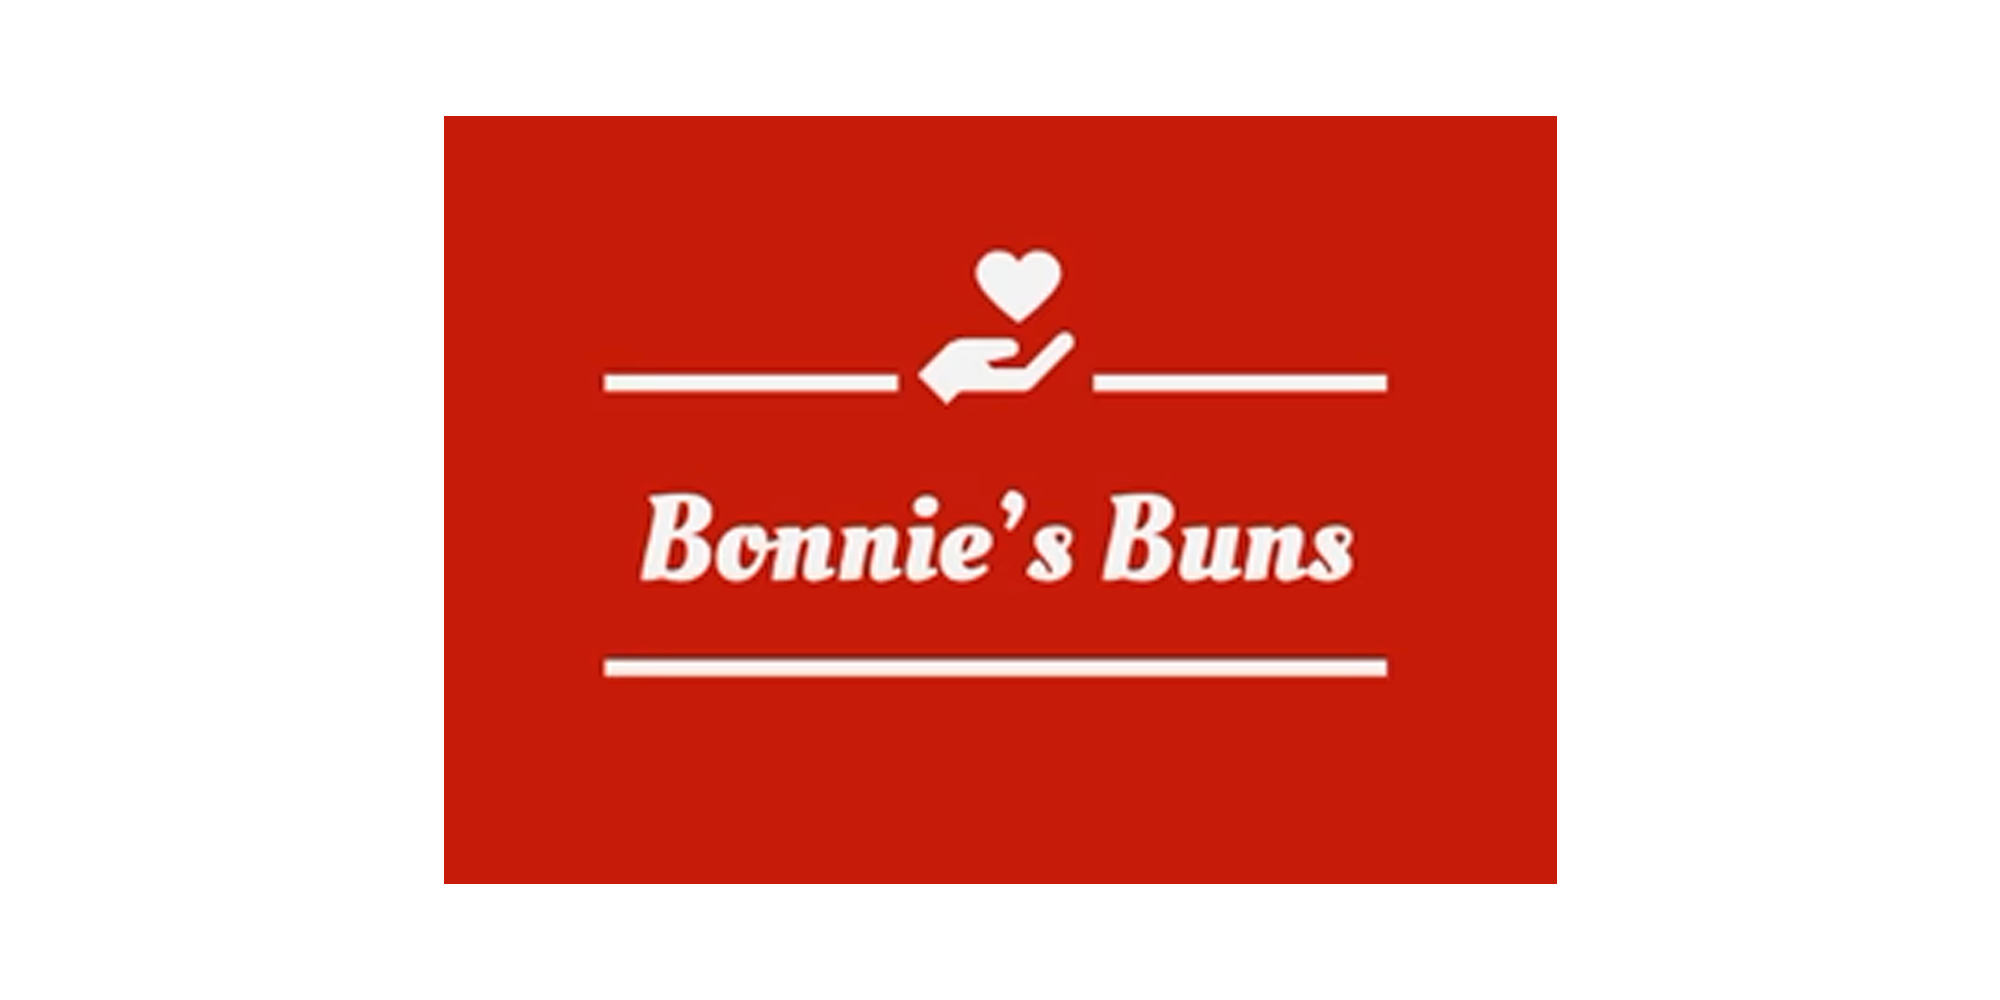 Bonnie's Buns Logos